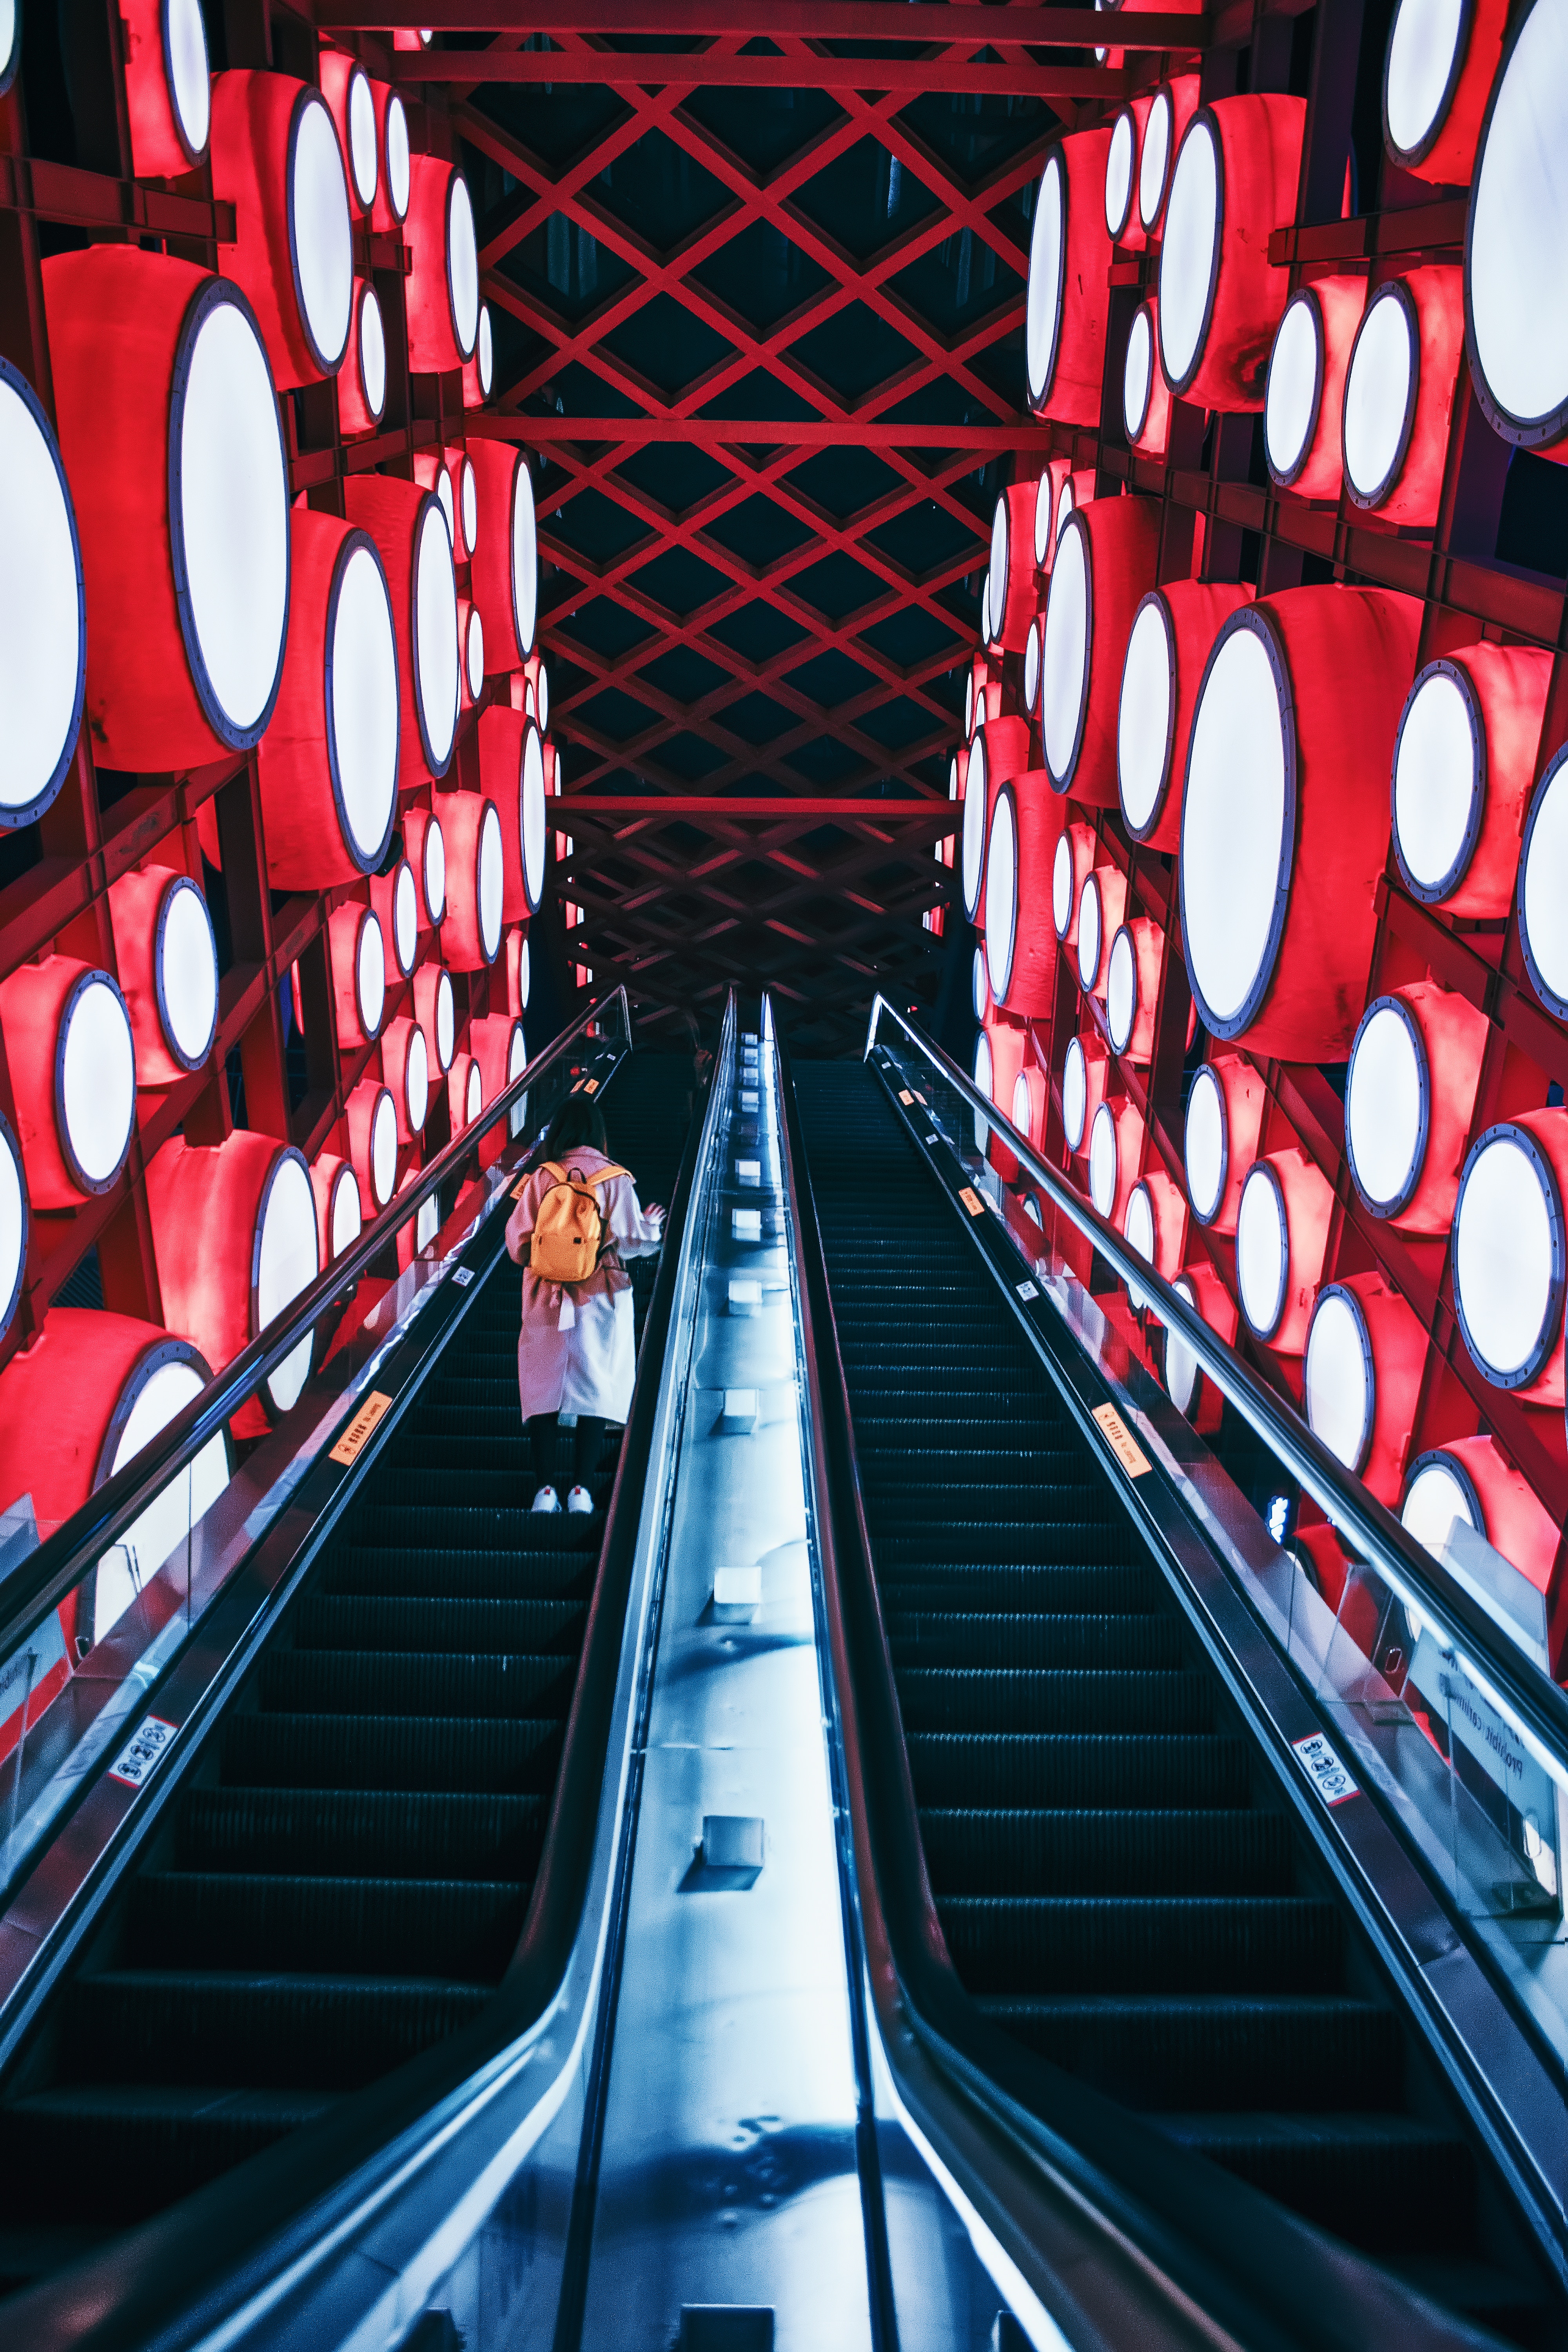 interior, red, lights, miscellanea, miscellaneous, lanterns, human, person, steps, escalator